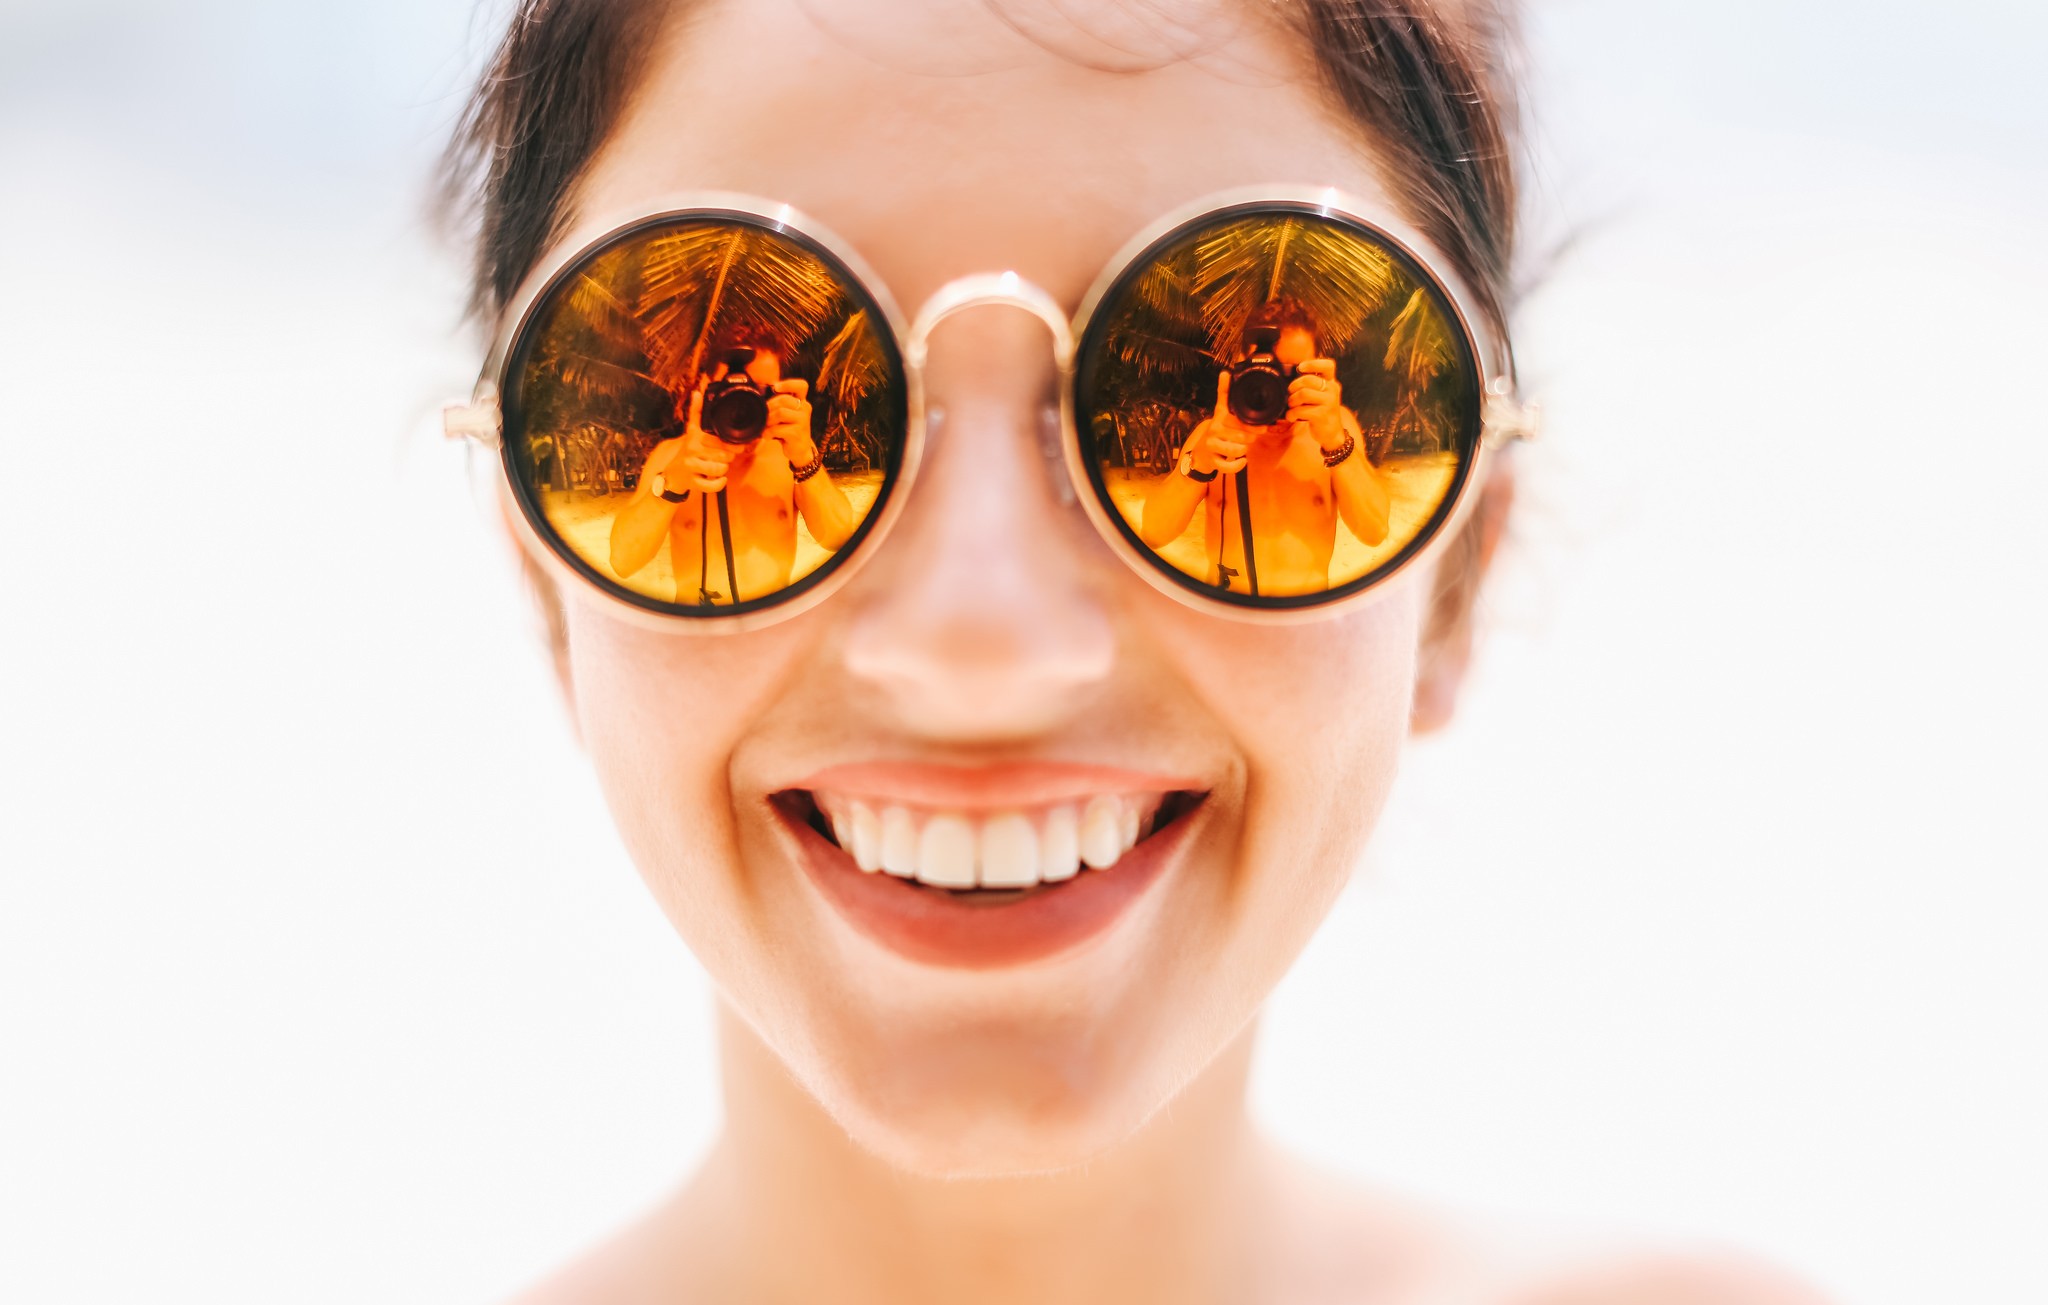 Aurela Skandaj Women Model Face Closeup Simple Background Smiling Women With Glasses Reflection Davi 2048x1305